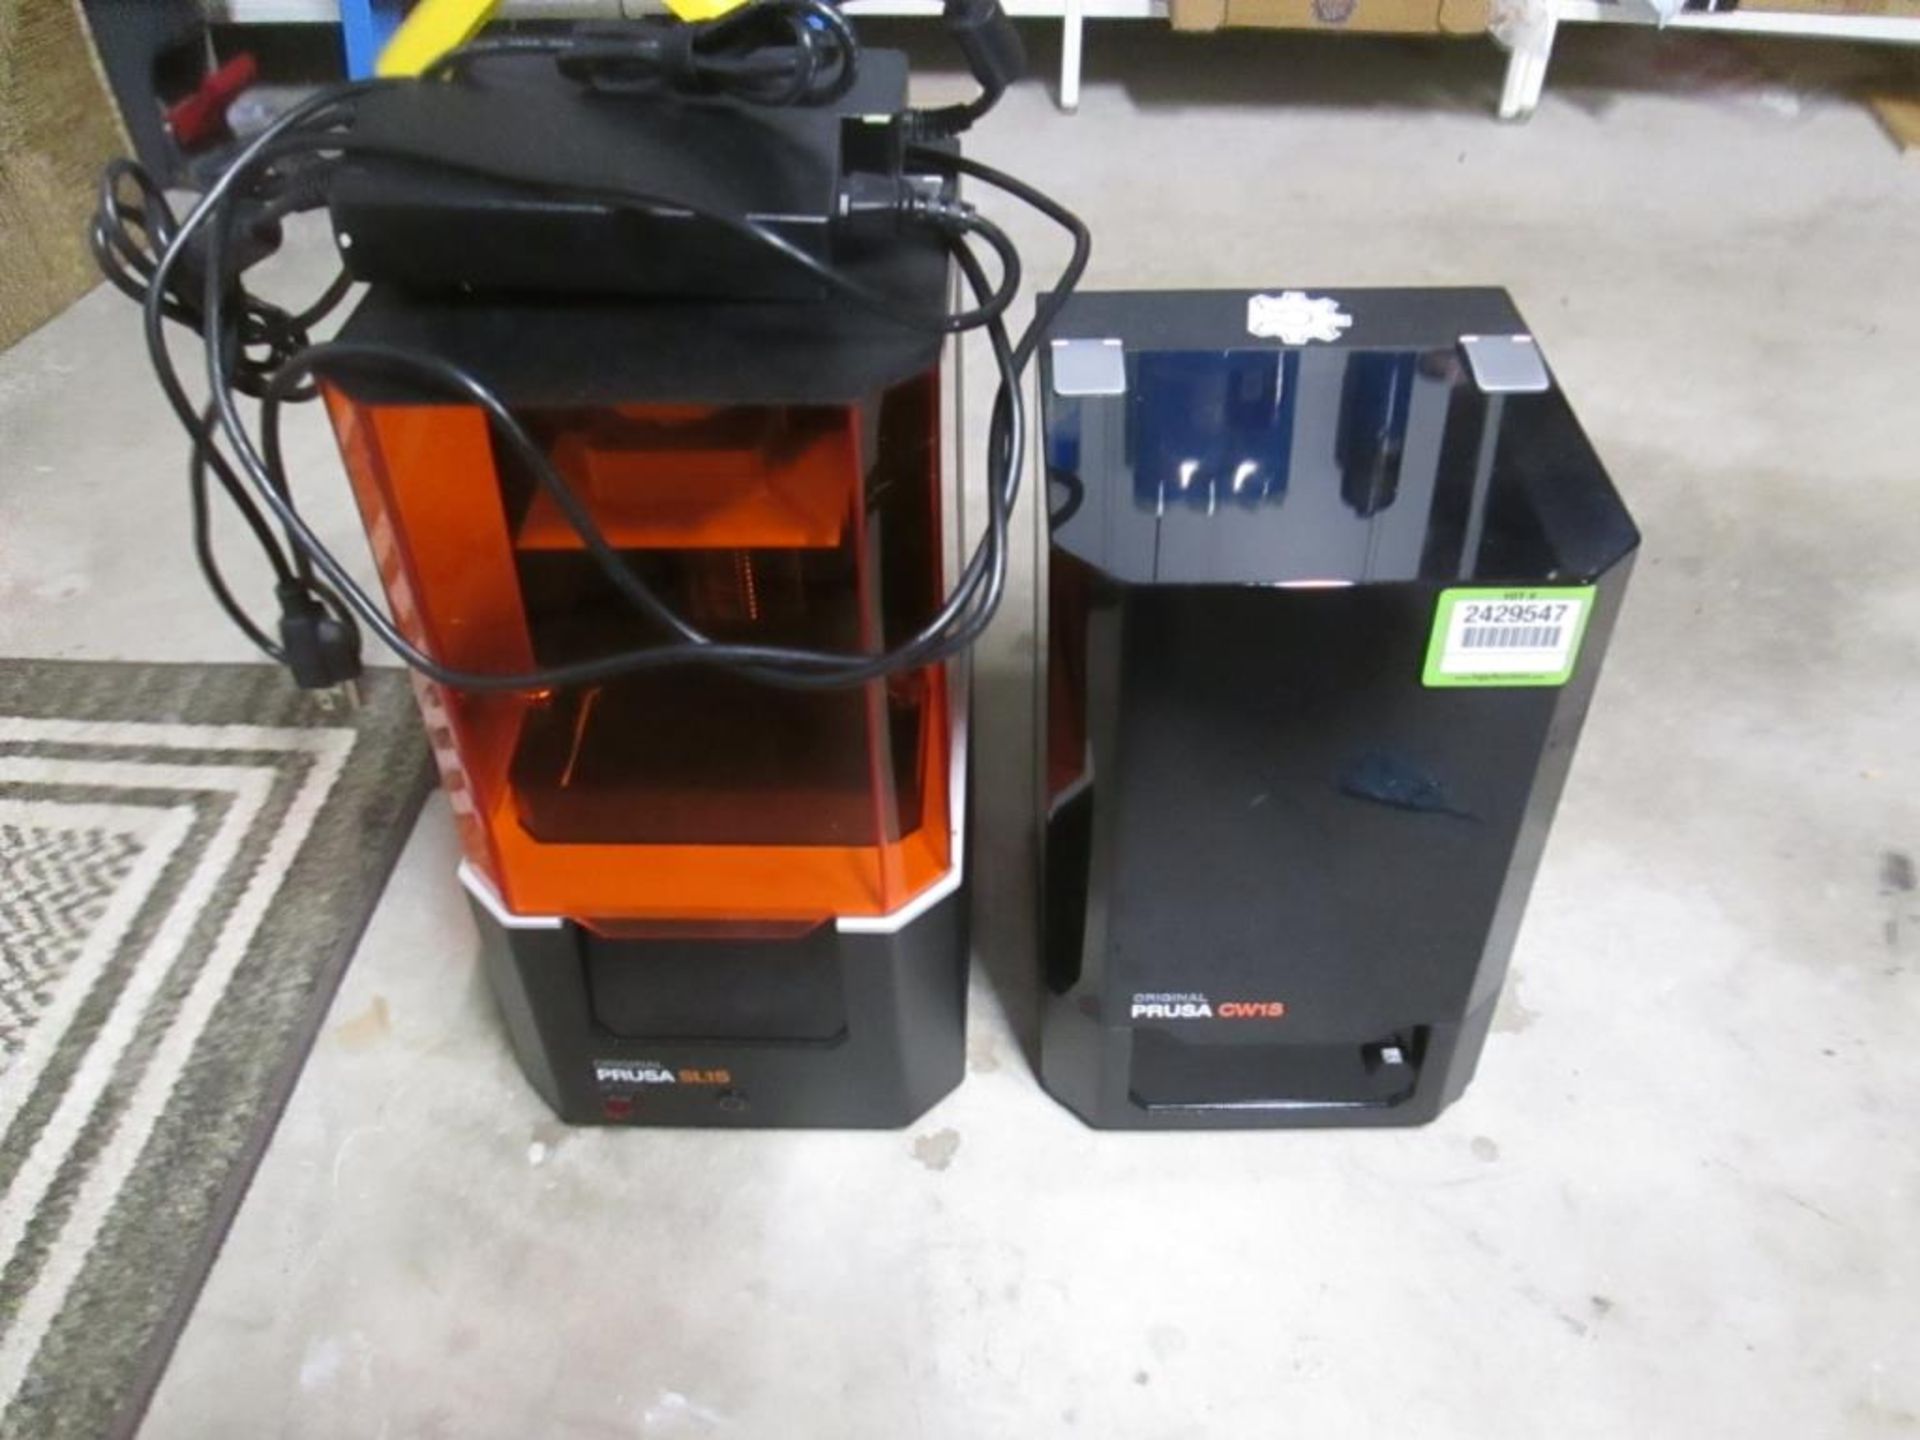 Prusa 3D Printer w/ Ultrasonic Cleaner